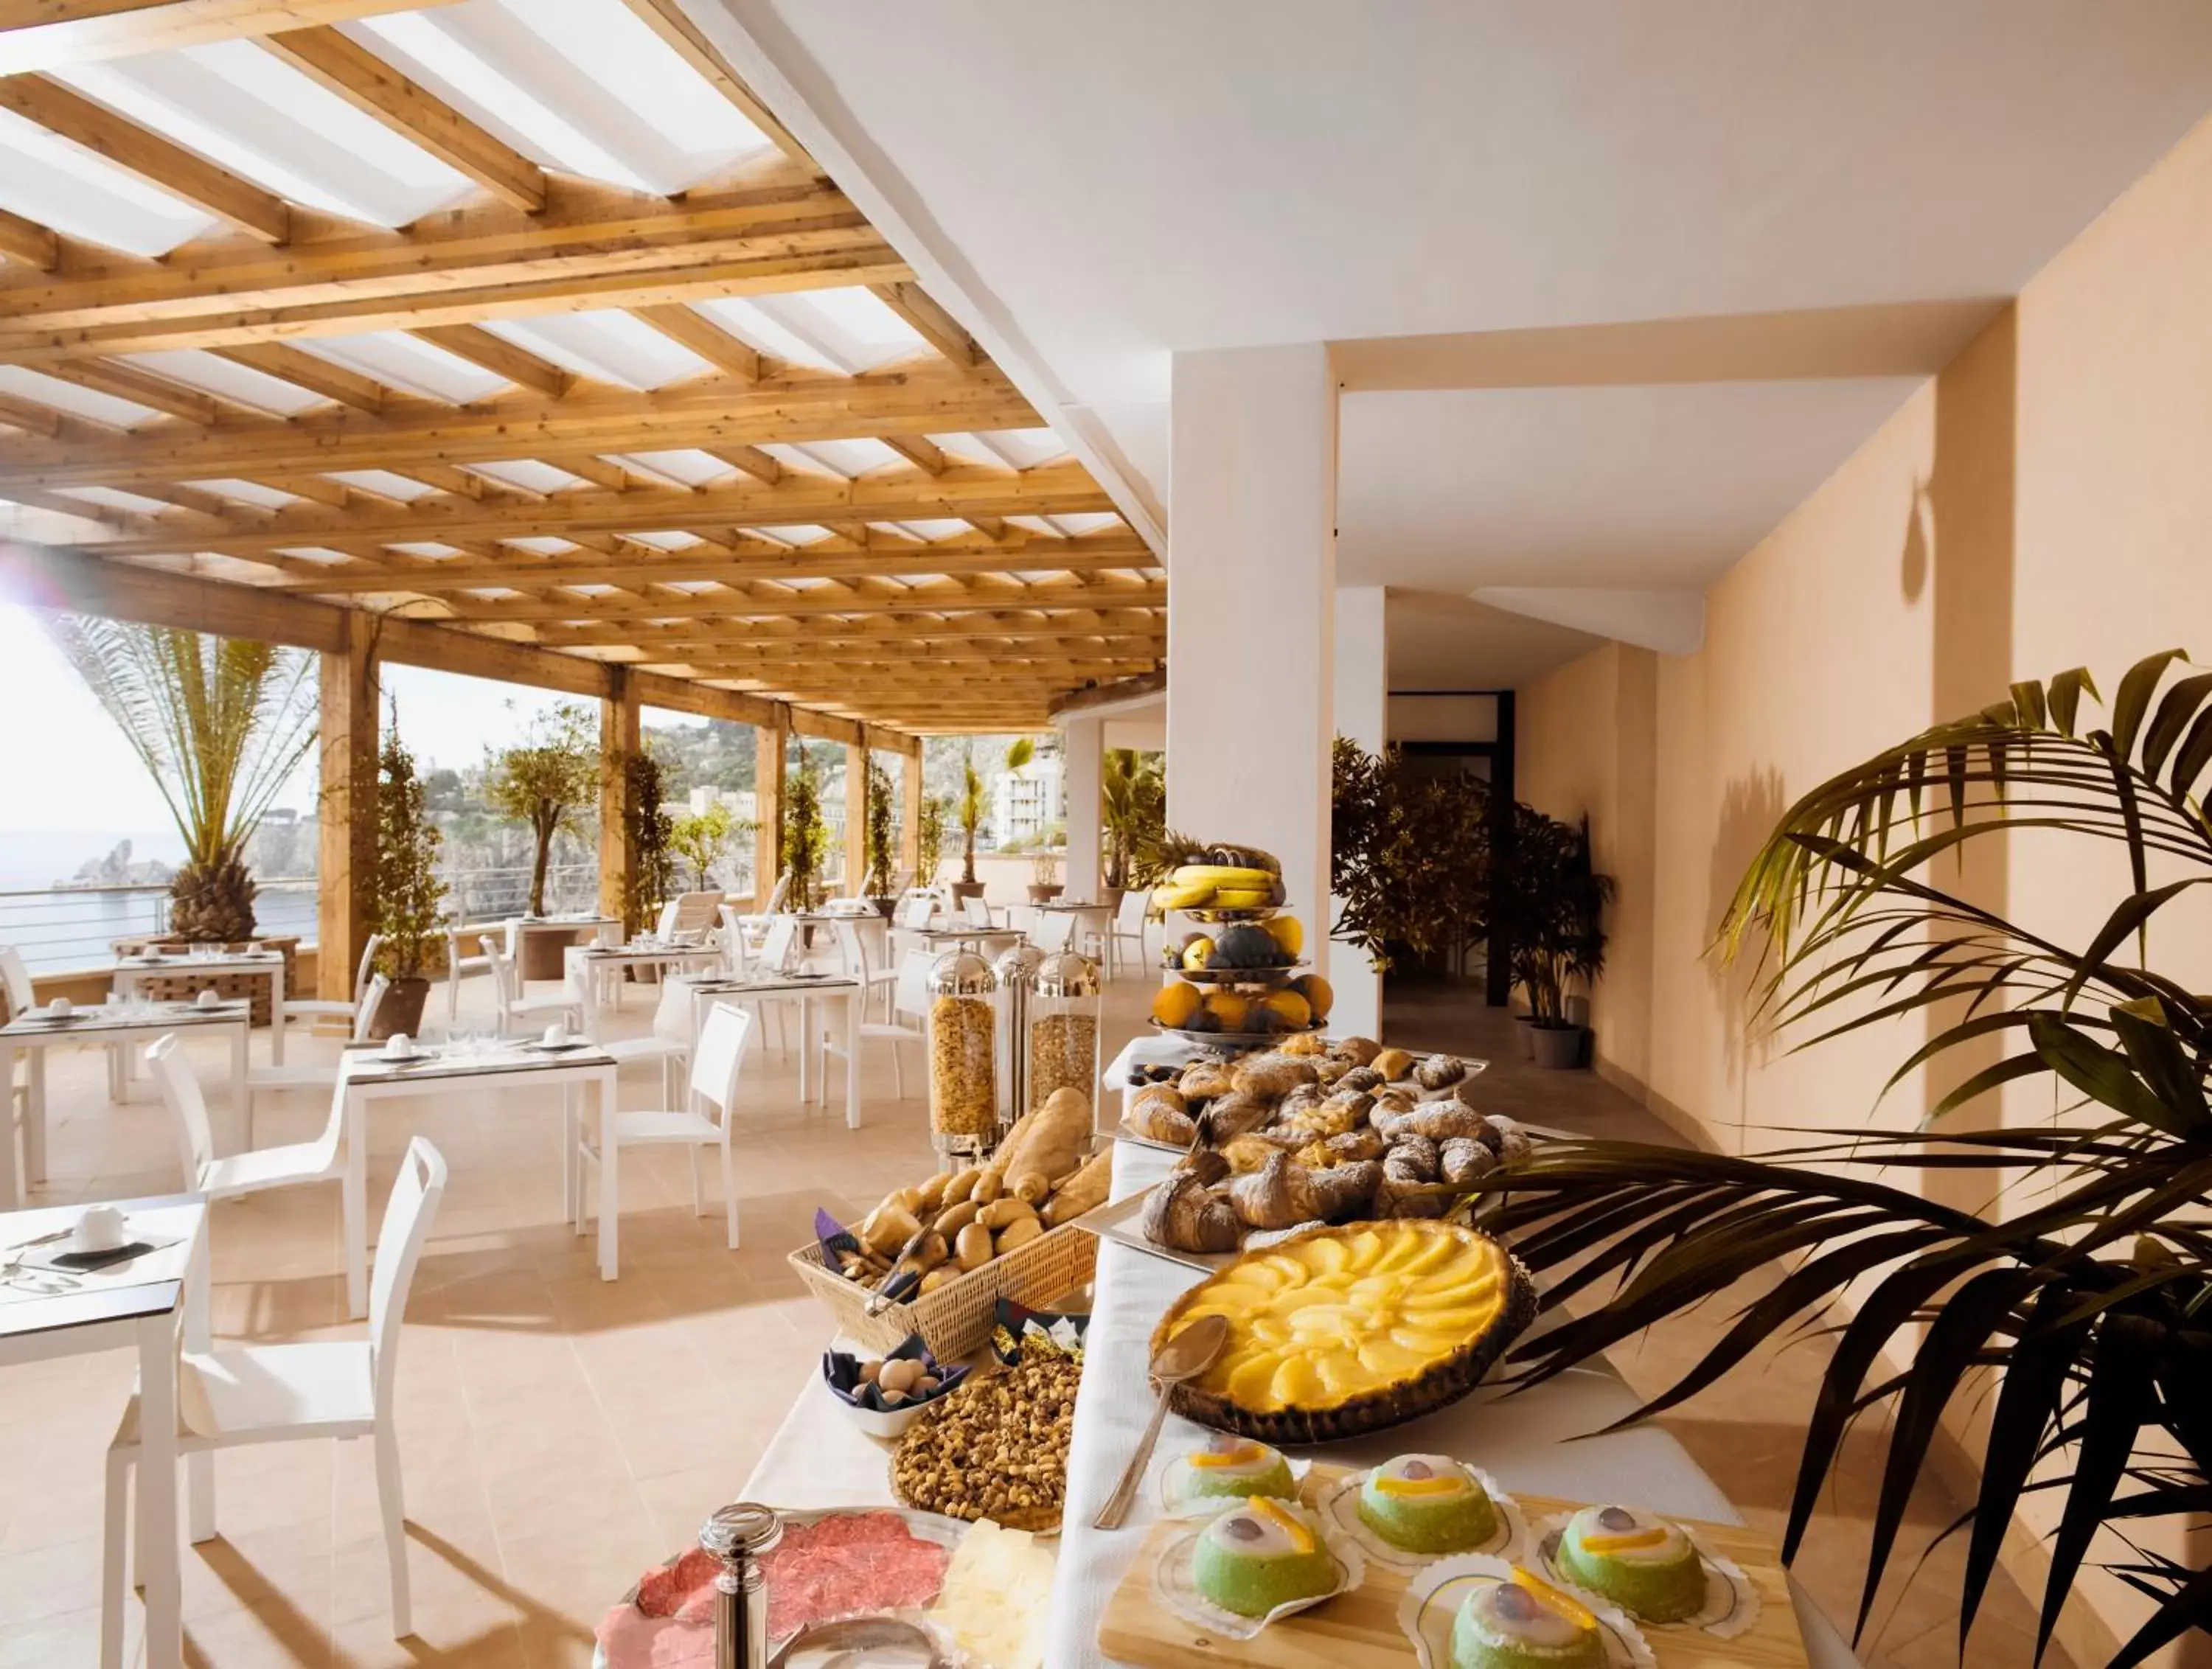 Buffet breakfast in Taormina Panoramic Hotel